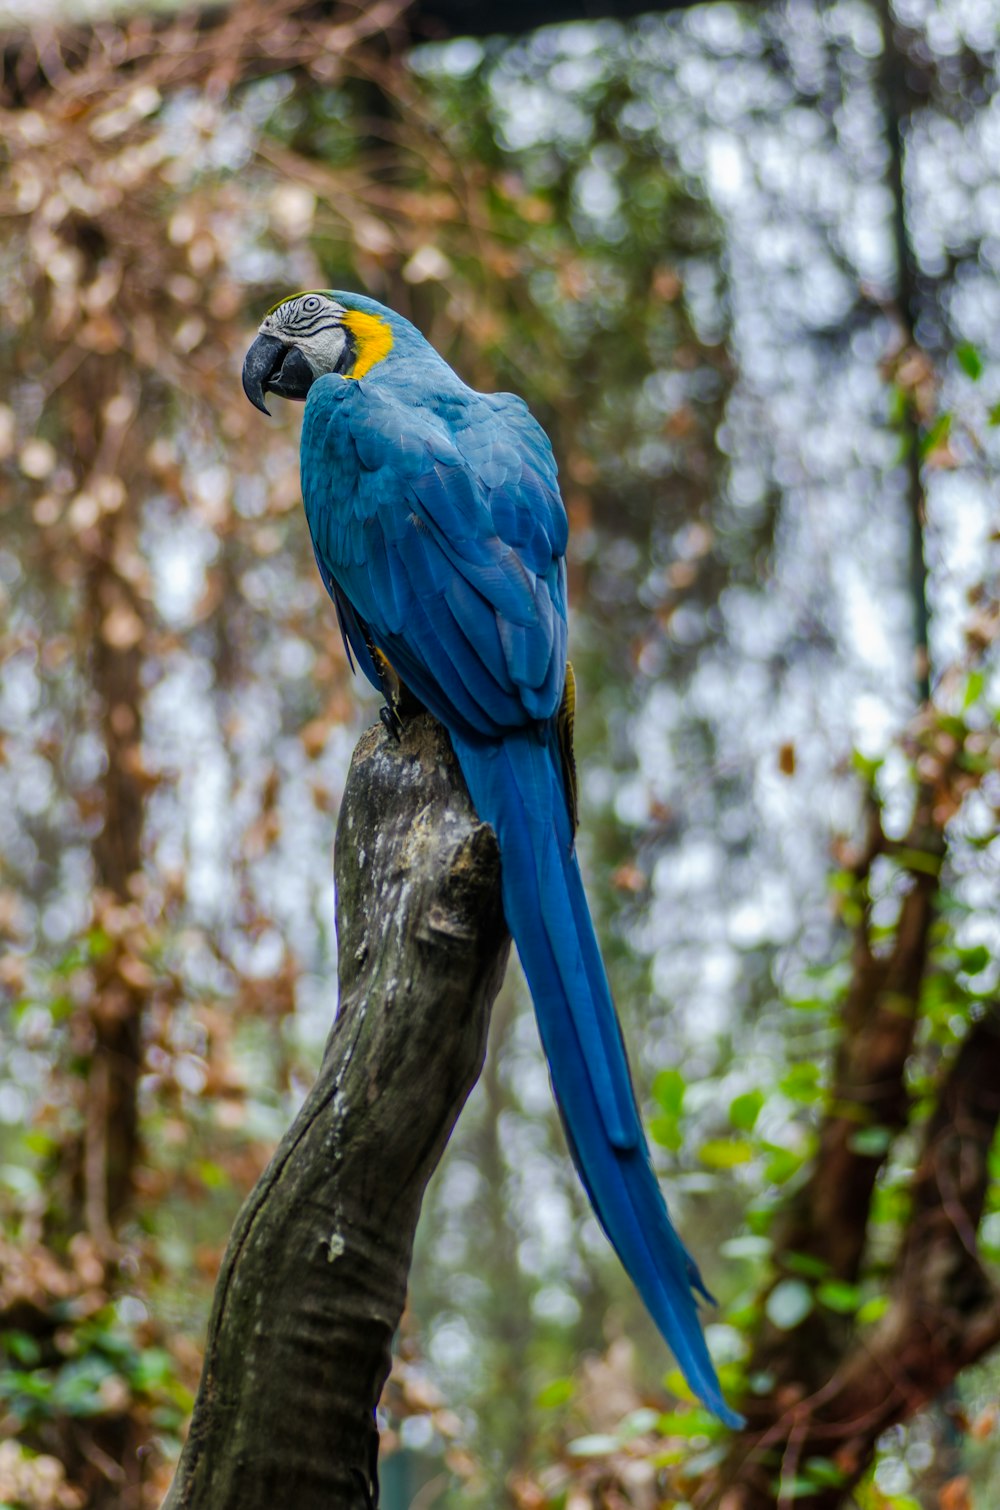 bokeh shot of blue and yellow bird